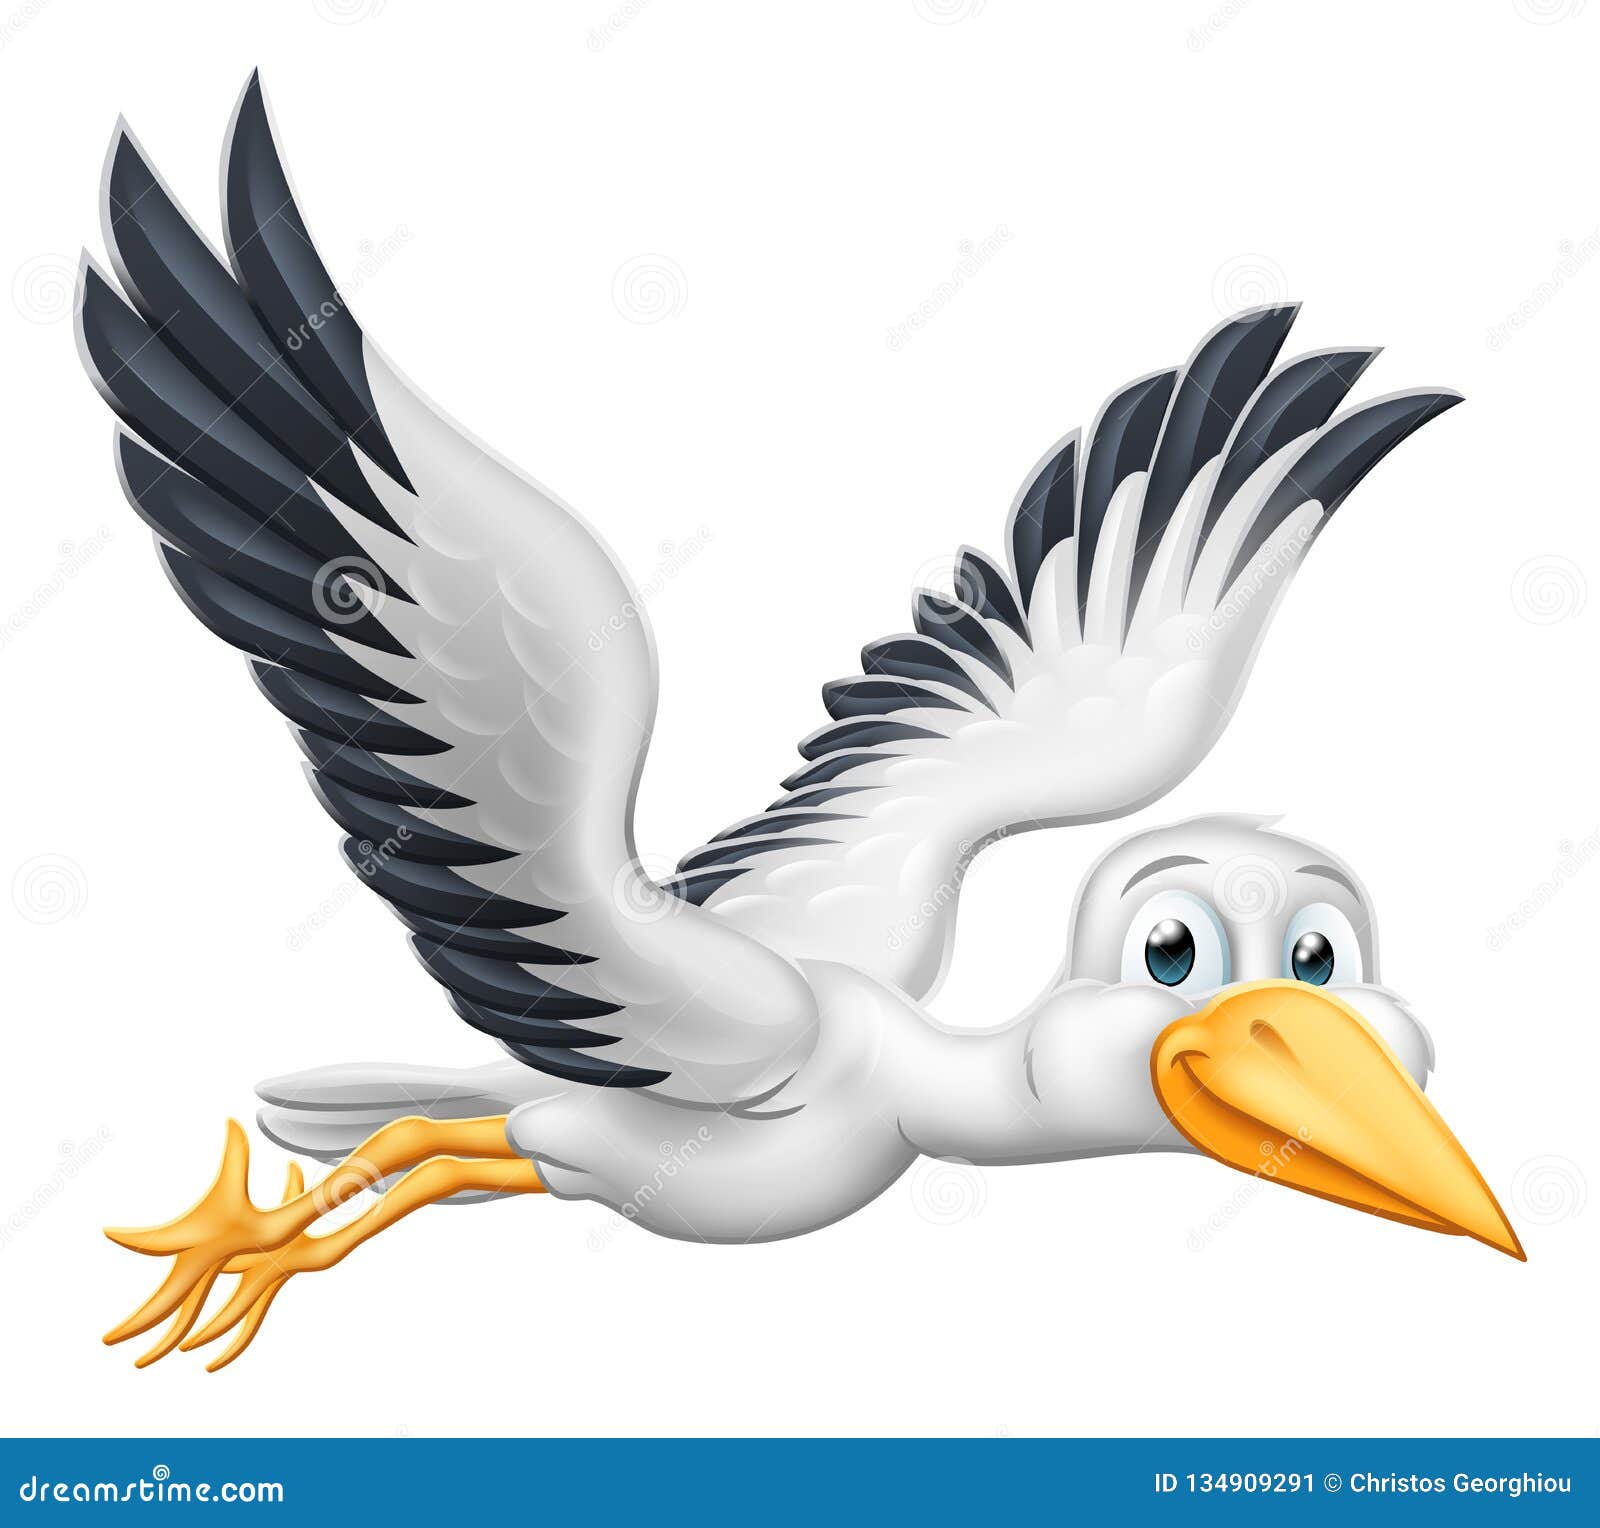 Stork Cartoon Pregnancy Myth Bird Flying Stock Vector - Illustration of  animals, design: 134909291